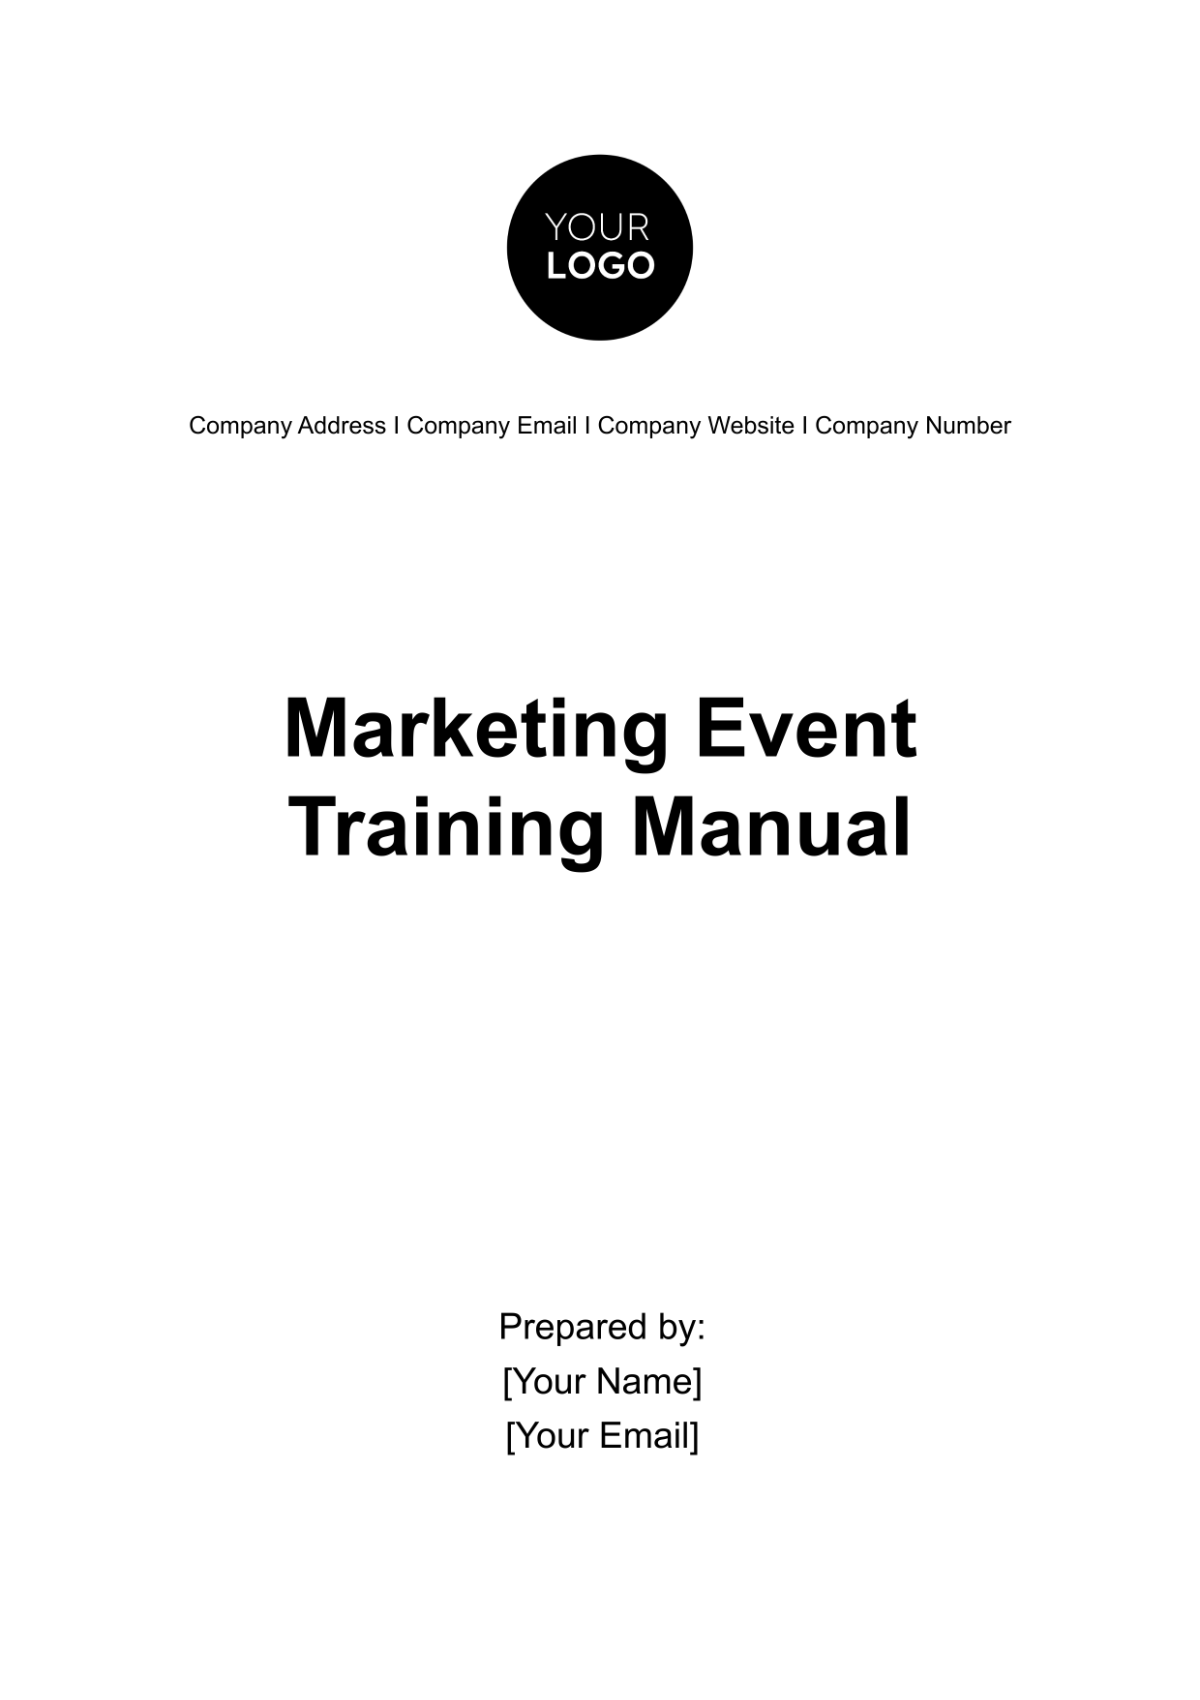 Free Marketing Event Training Manual Template